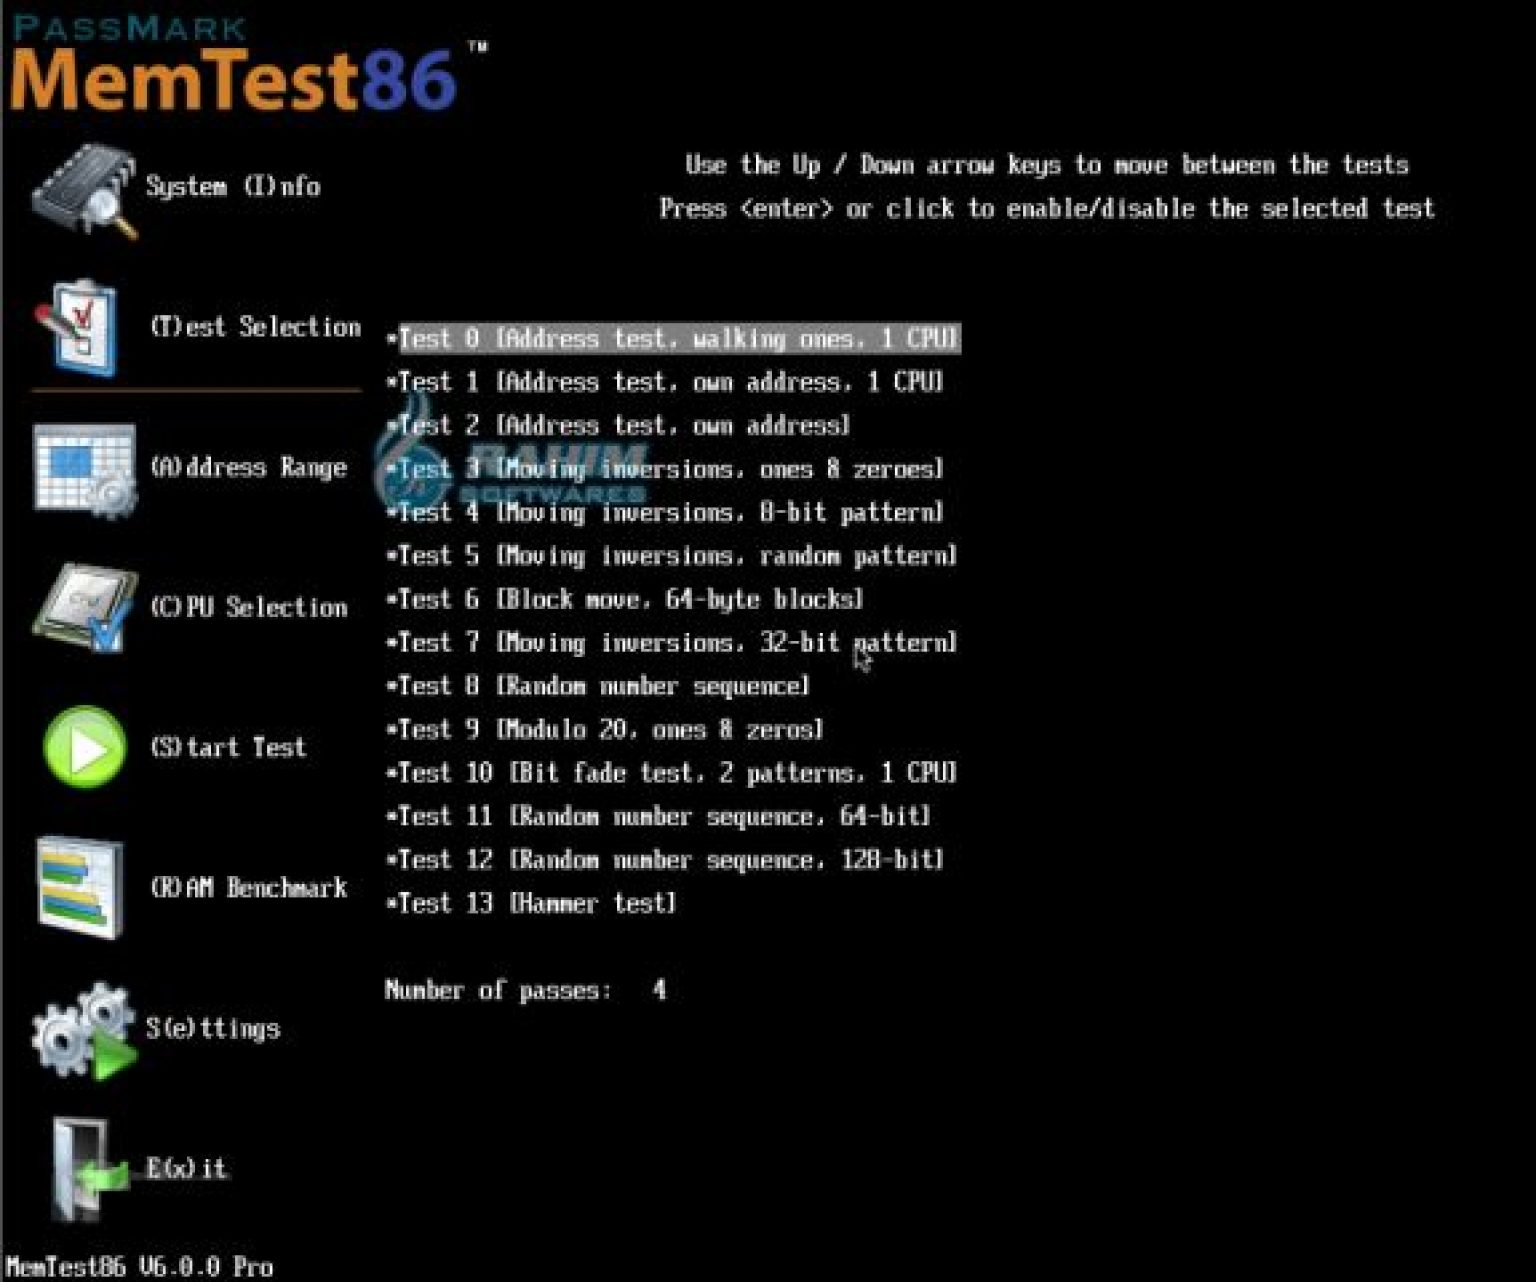 Memtest86 Pro 10.6.1000 instaling